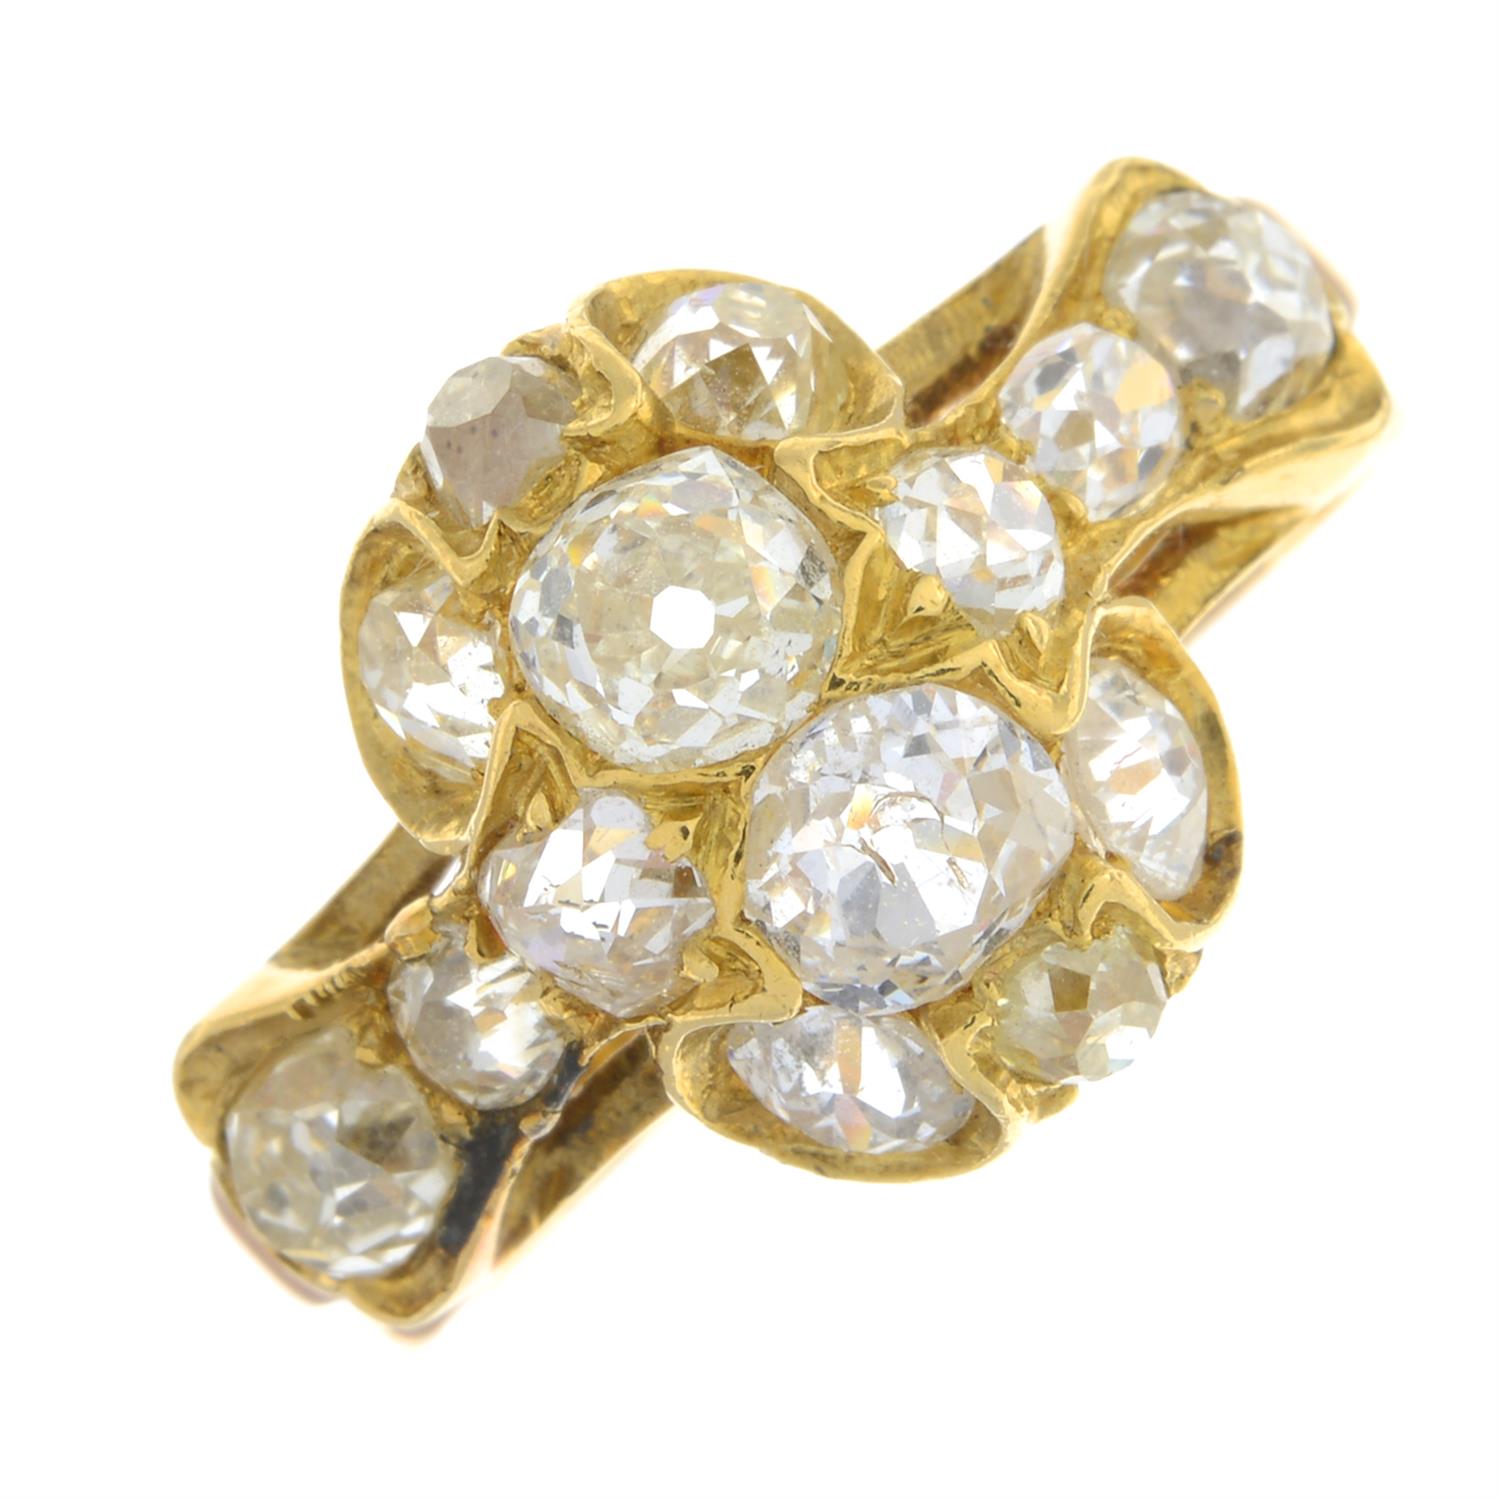 Late 19th century 18ct gold diamond ring - Image 2 of 6